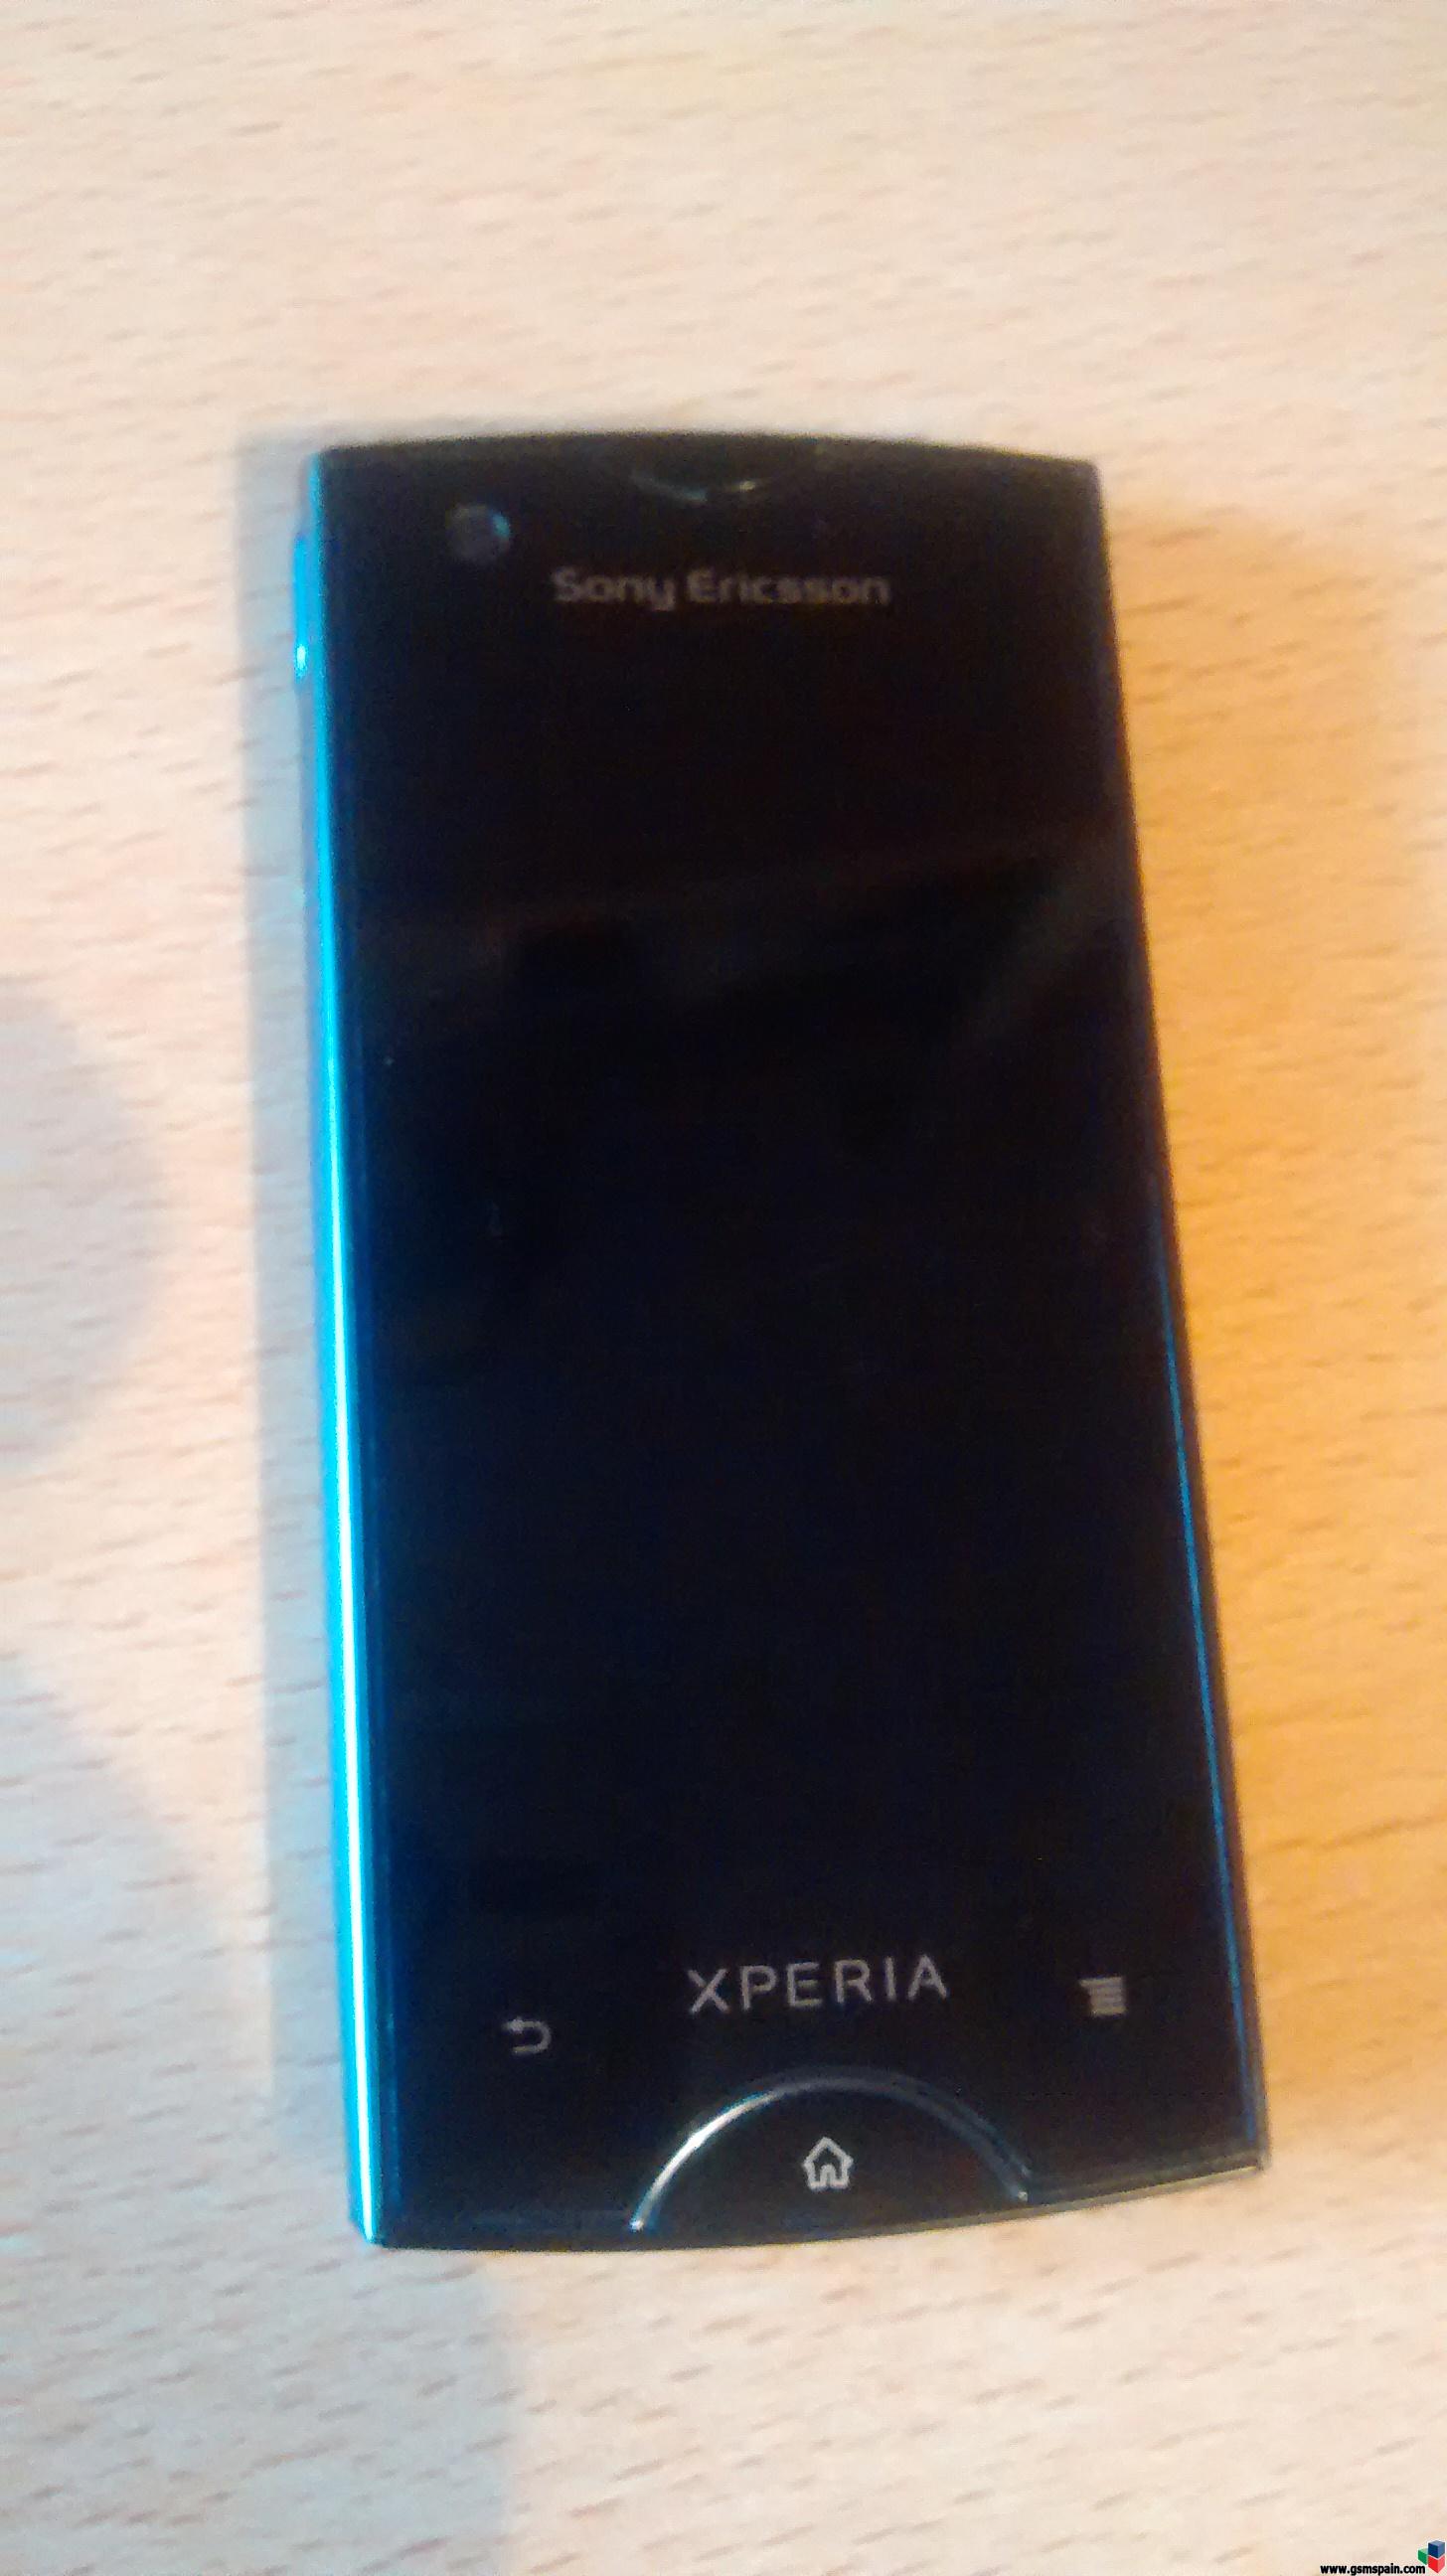 [VENDO] Sony Xperia Ray libre - 70